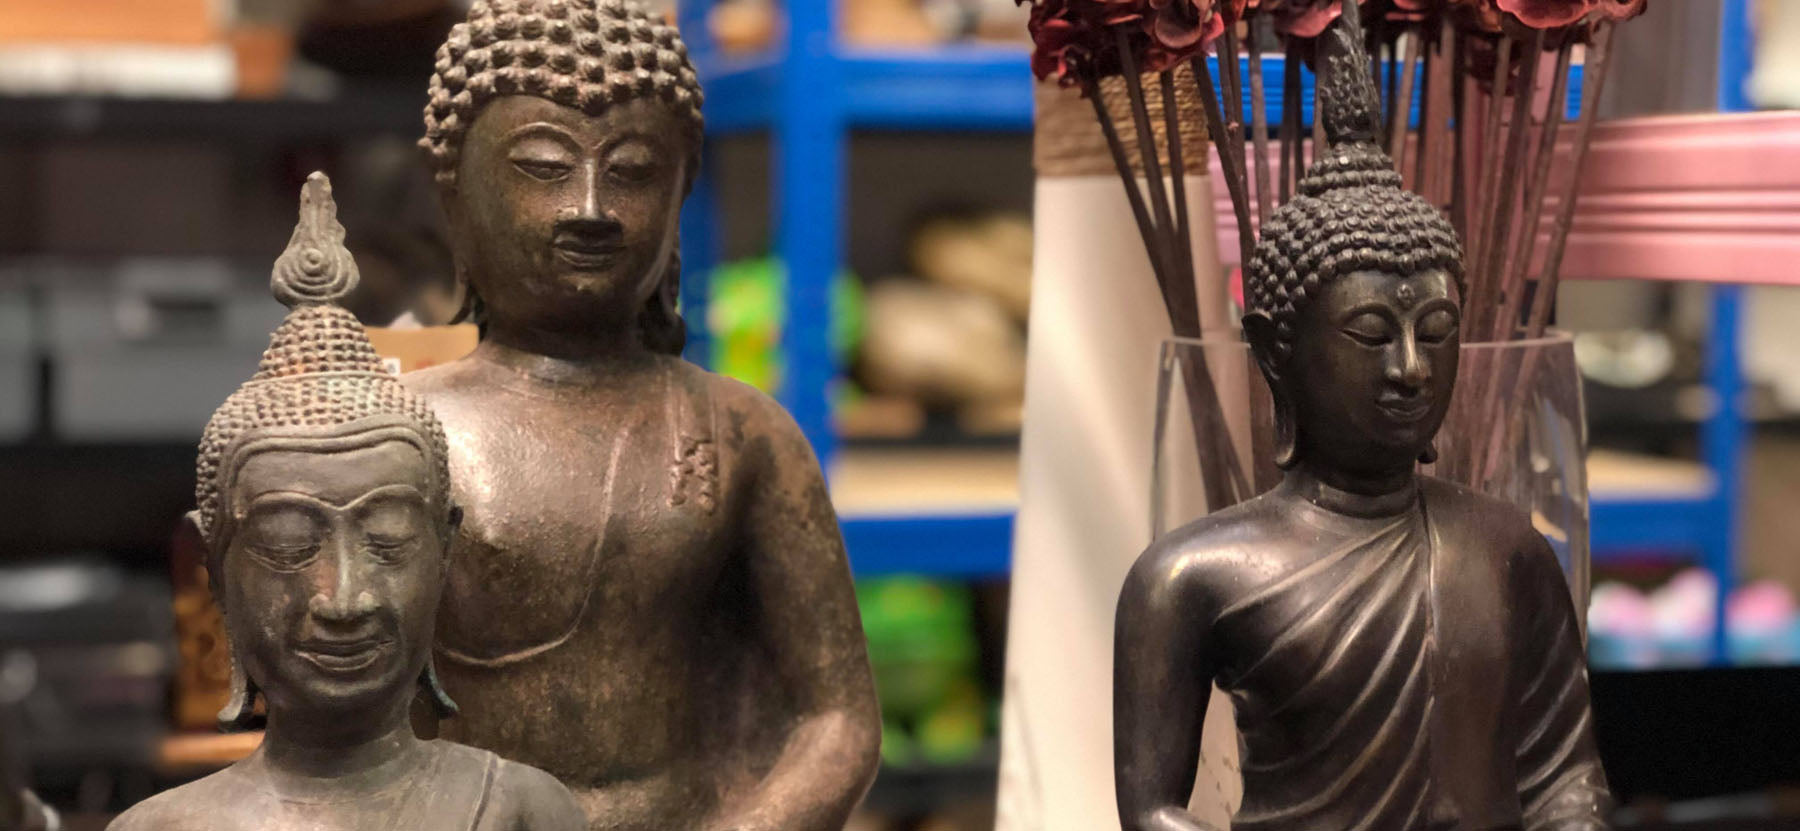 Buddhas - keeping it legal